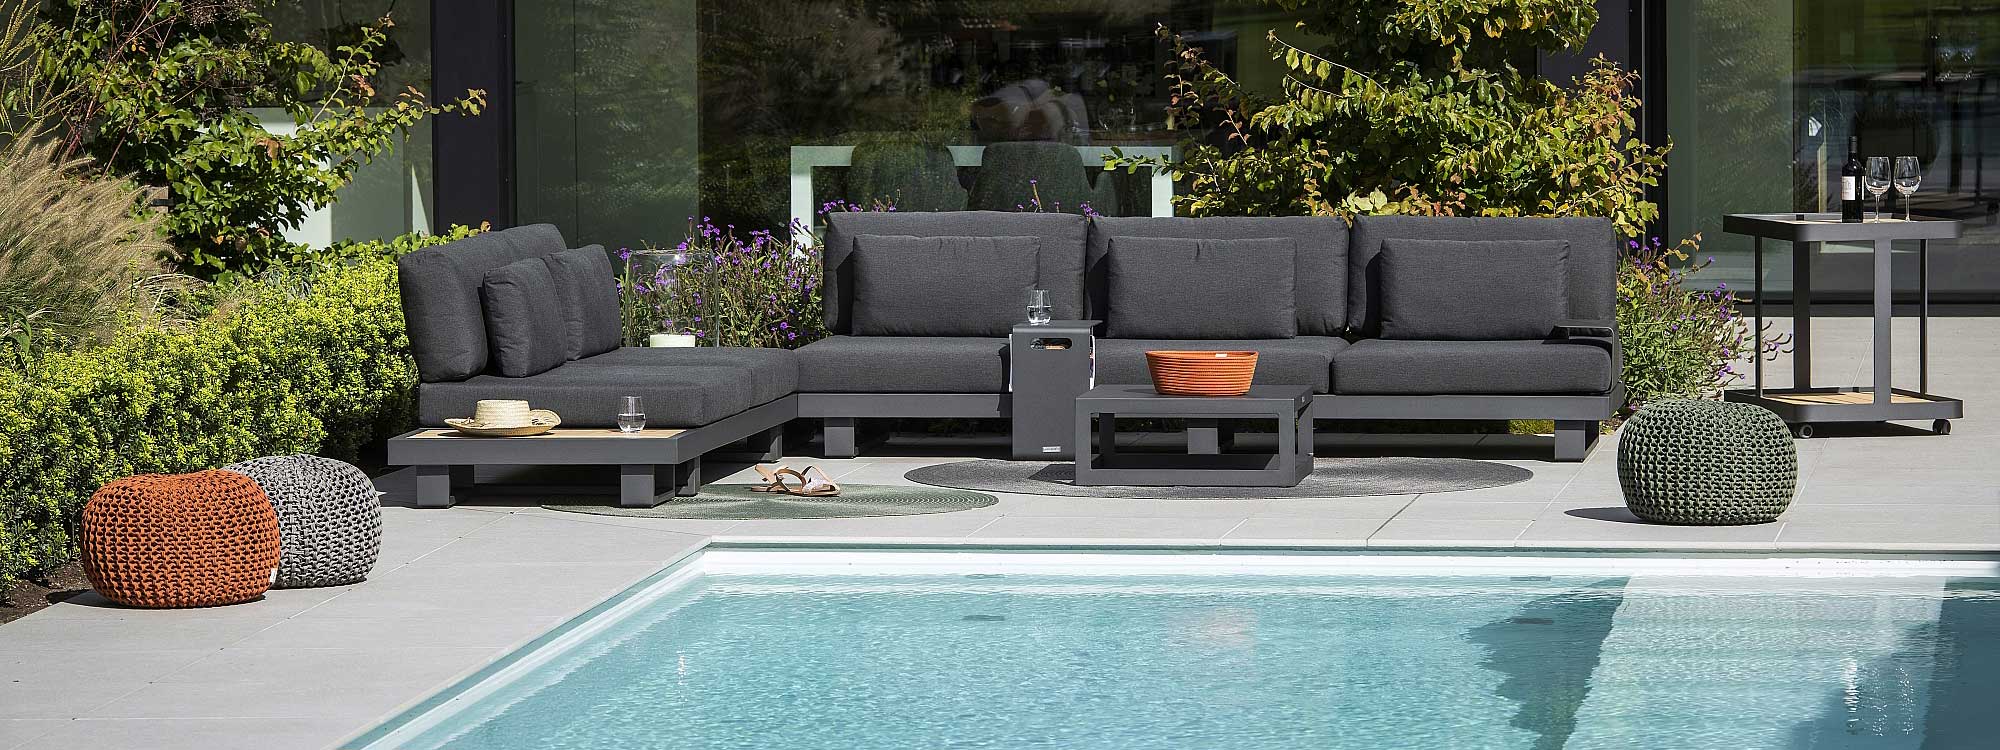 Image of Fano dark grey garden sofa with dark grey cushions on sunny poolside